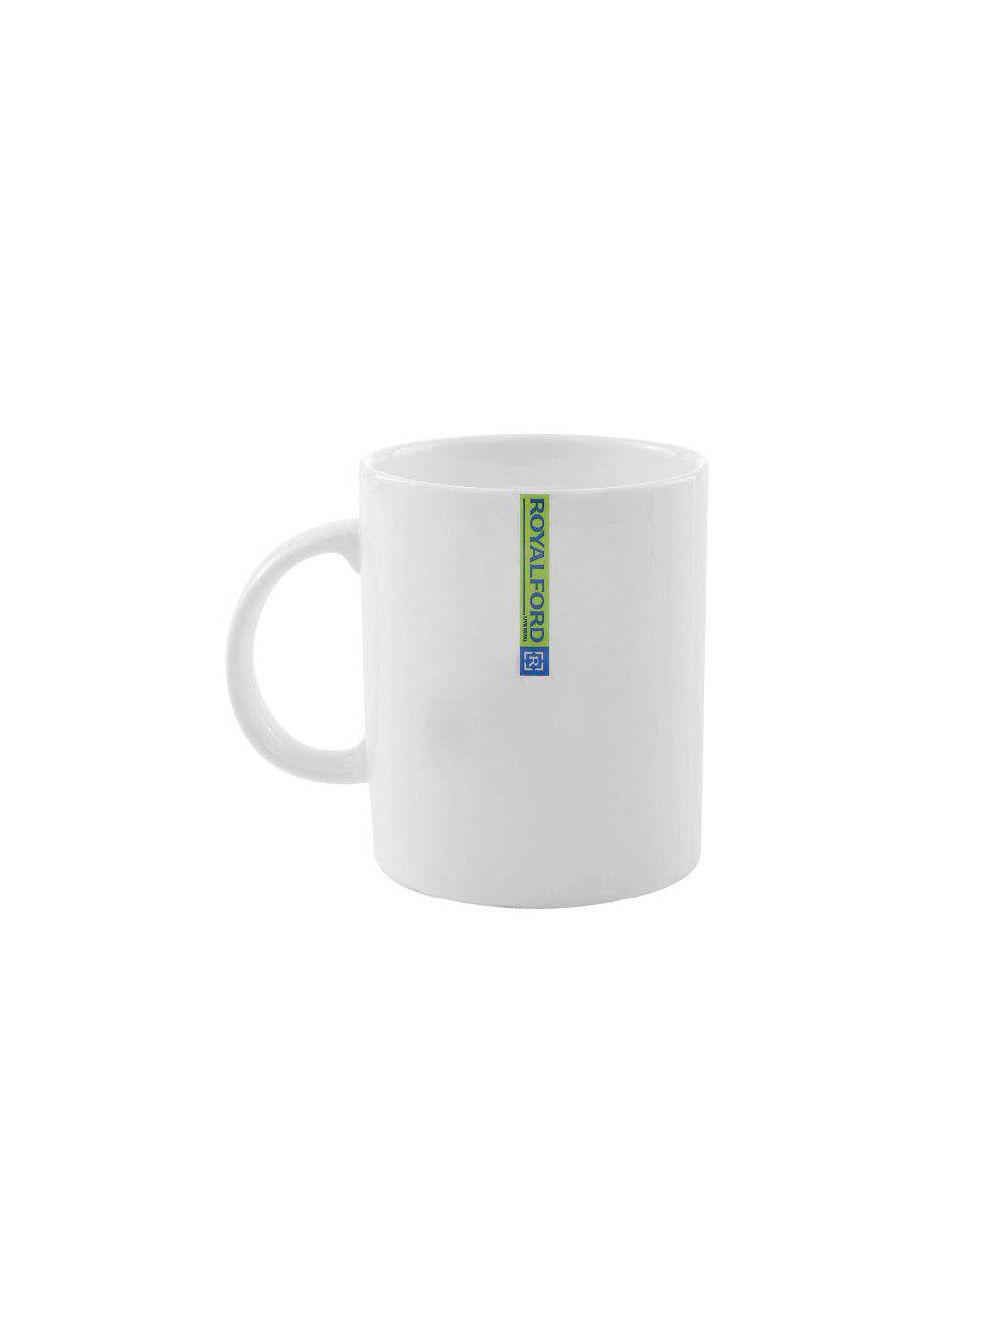 Royalford RF8018 280 ml Magnesia Porcelain Mug